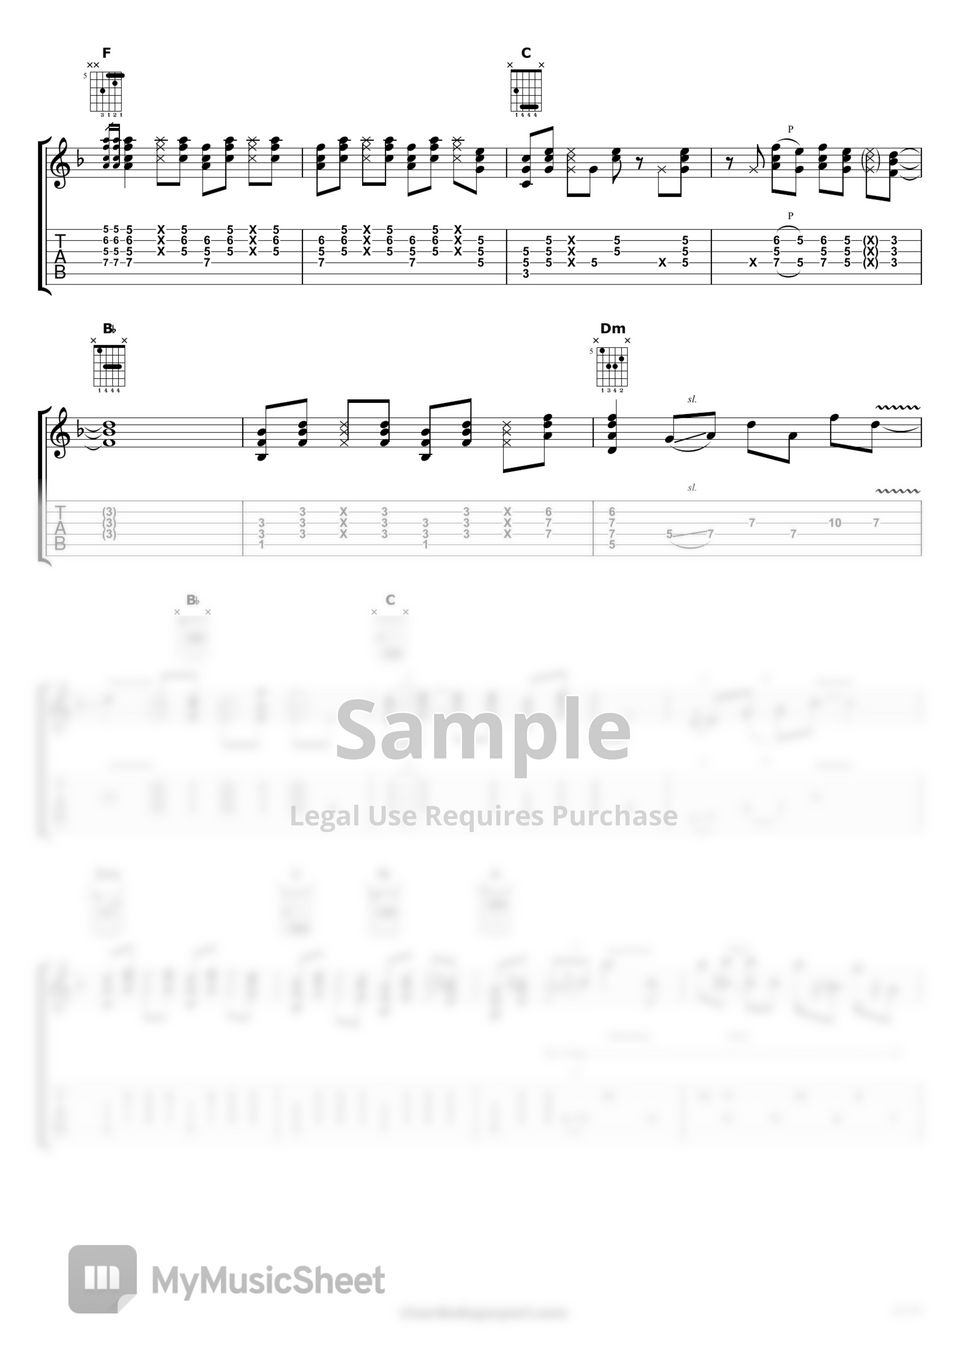 Dire Straits - Sultans of Swing (for one guitar) by Ricardo De Gaspari